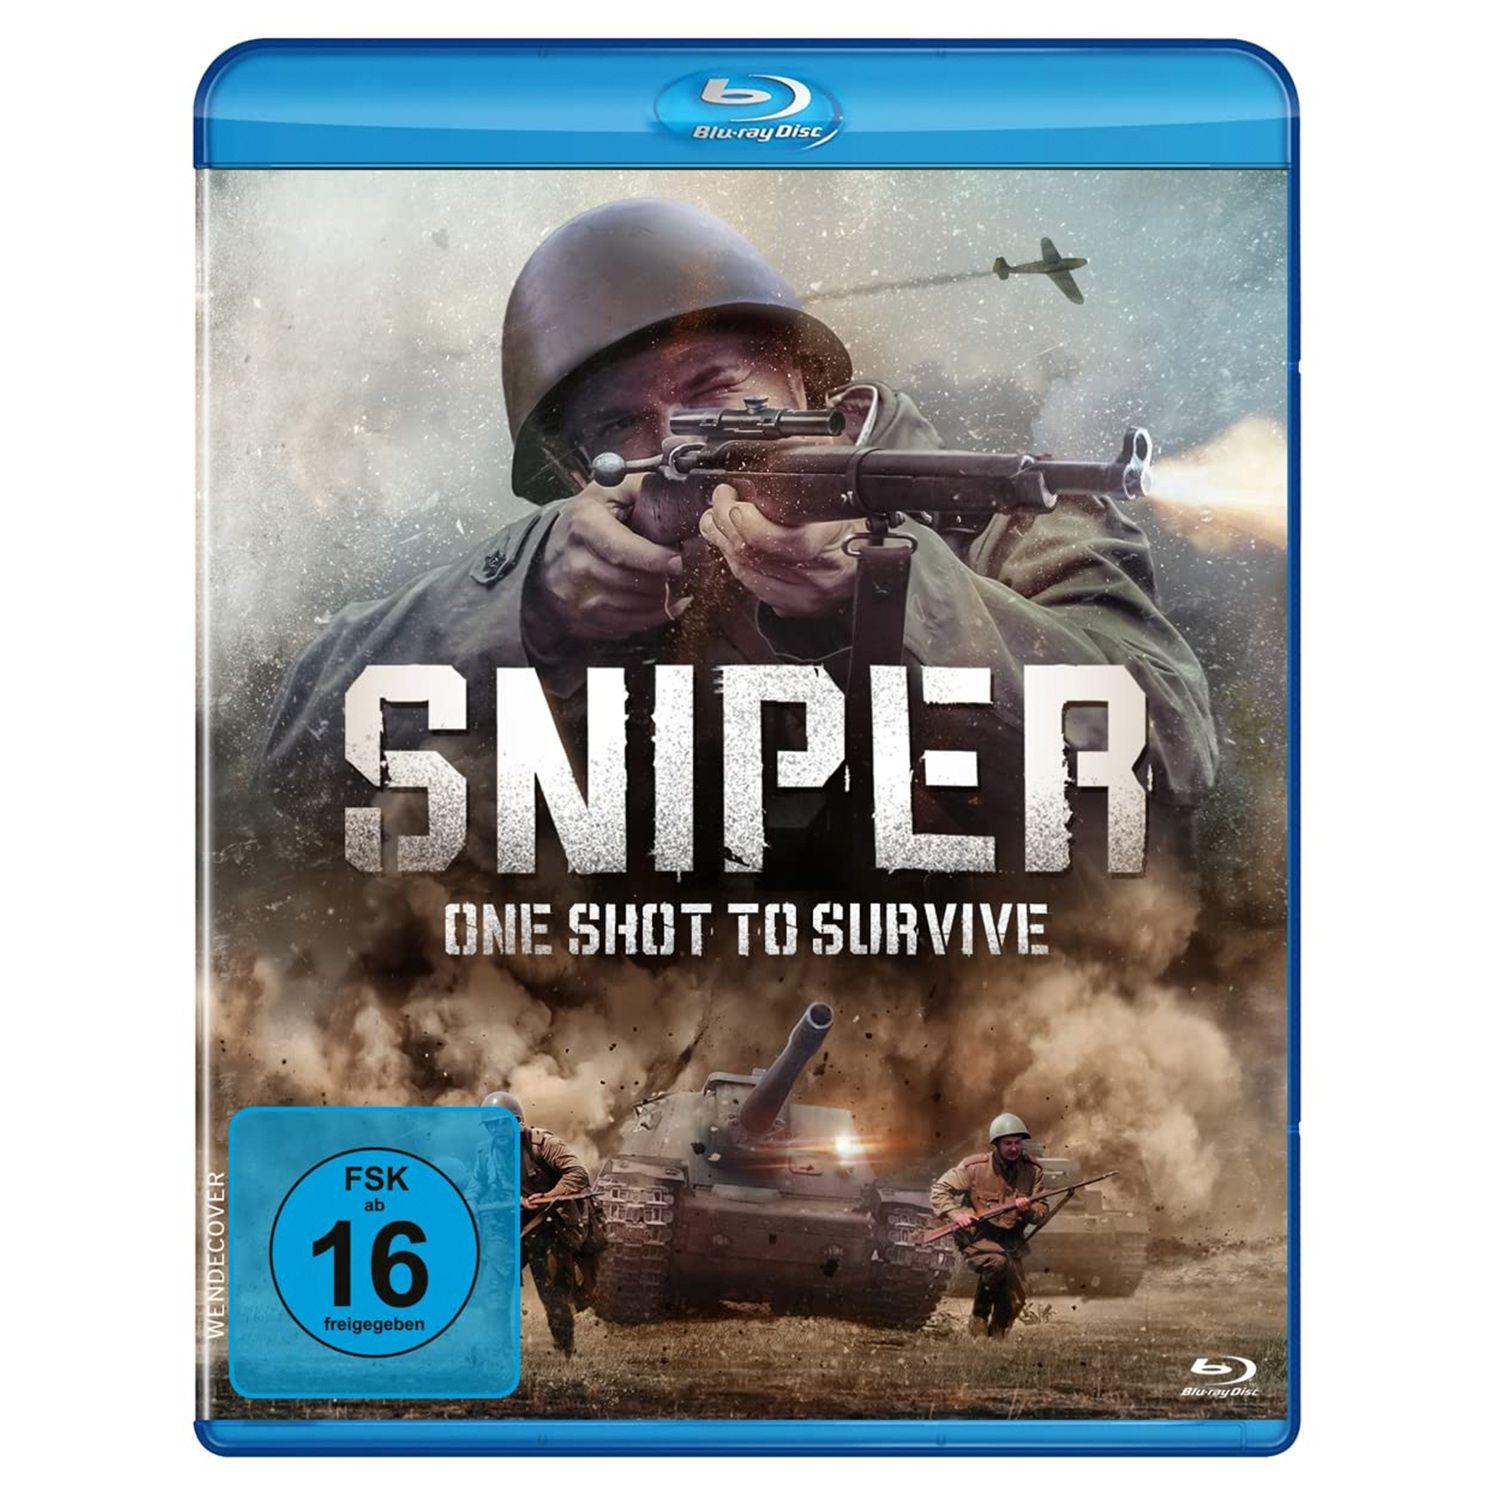 Siberian Sniper (2022), Official Trailer